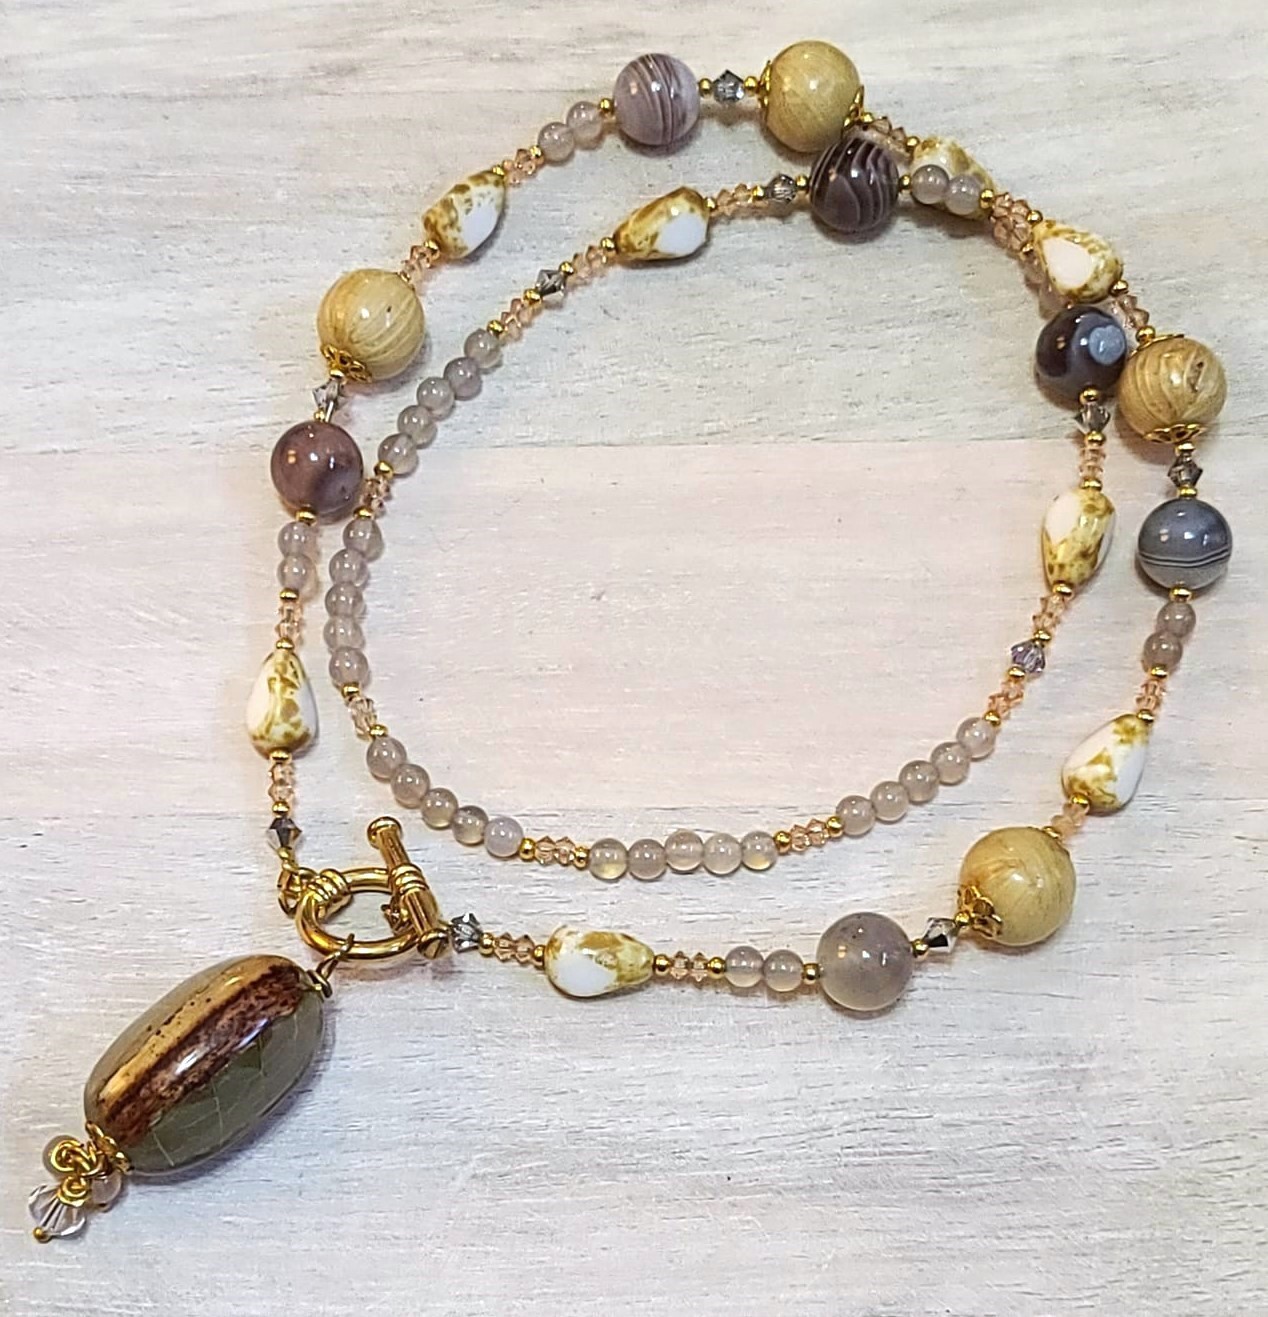 Gemstone lariat necklace, agate gemstone, crystals, handcrafted